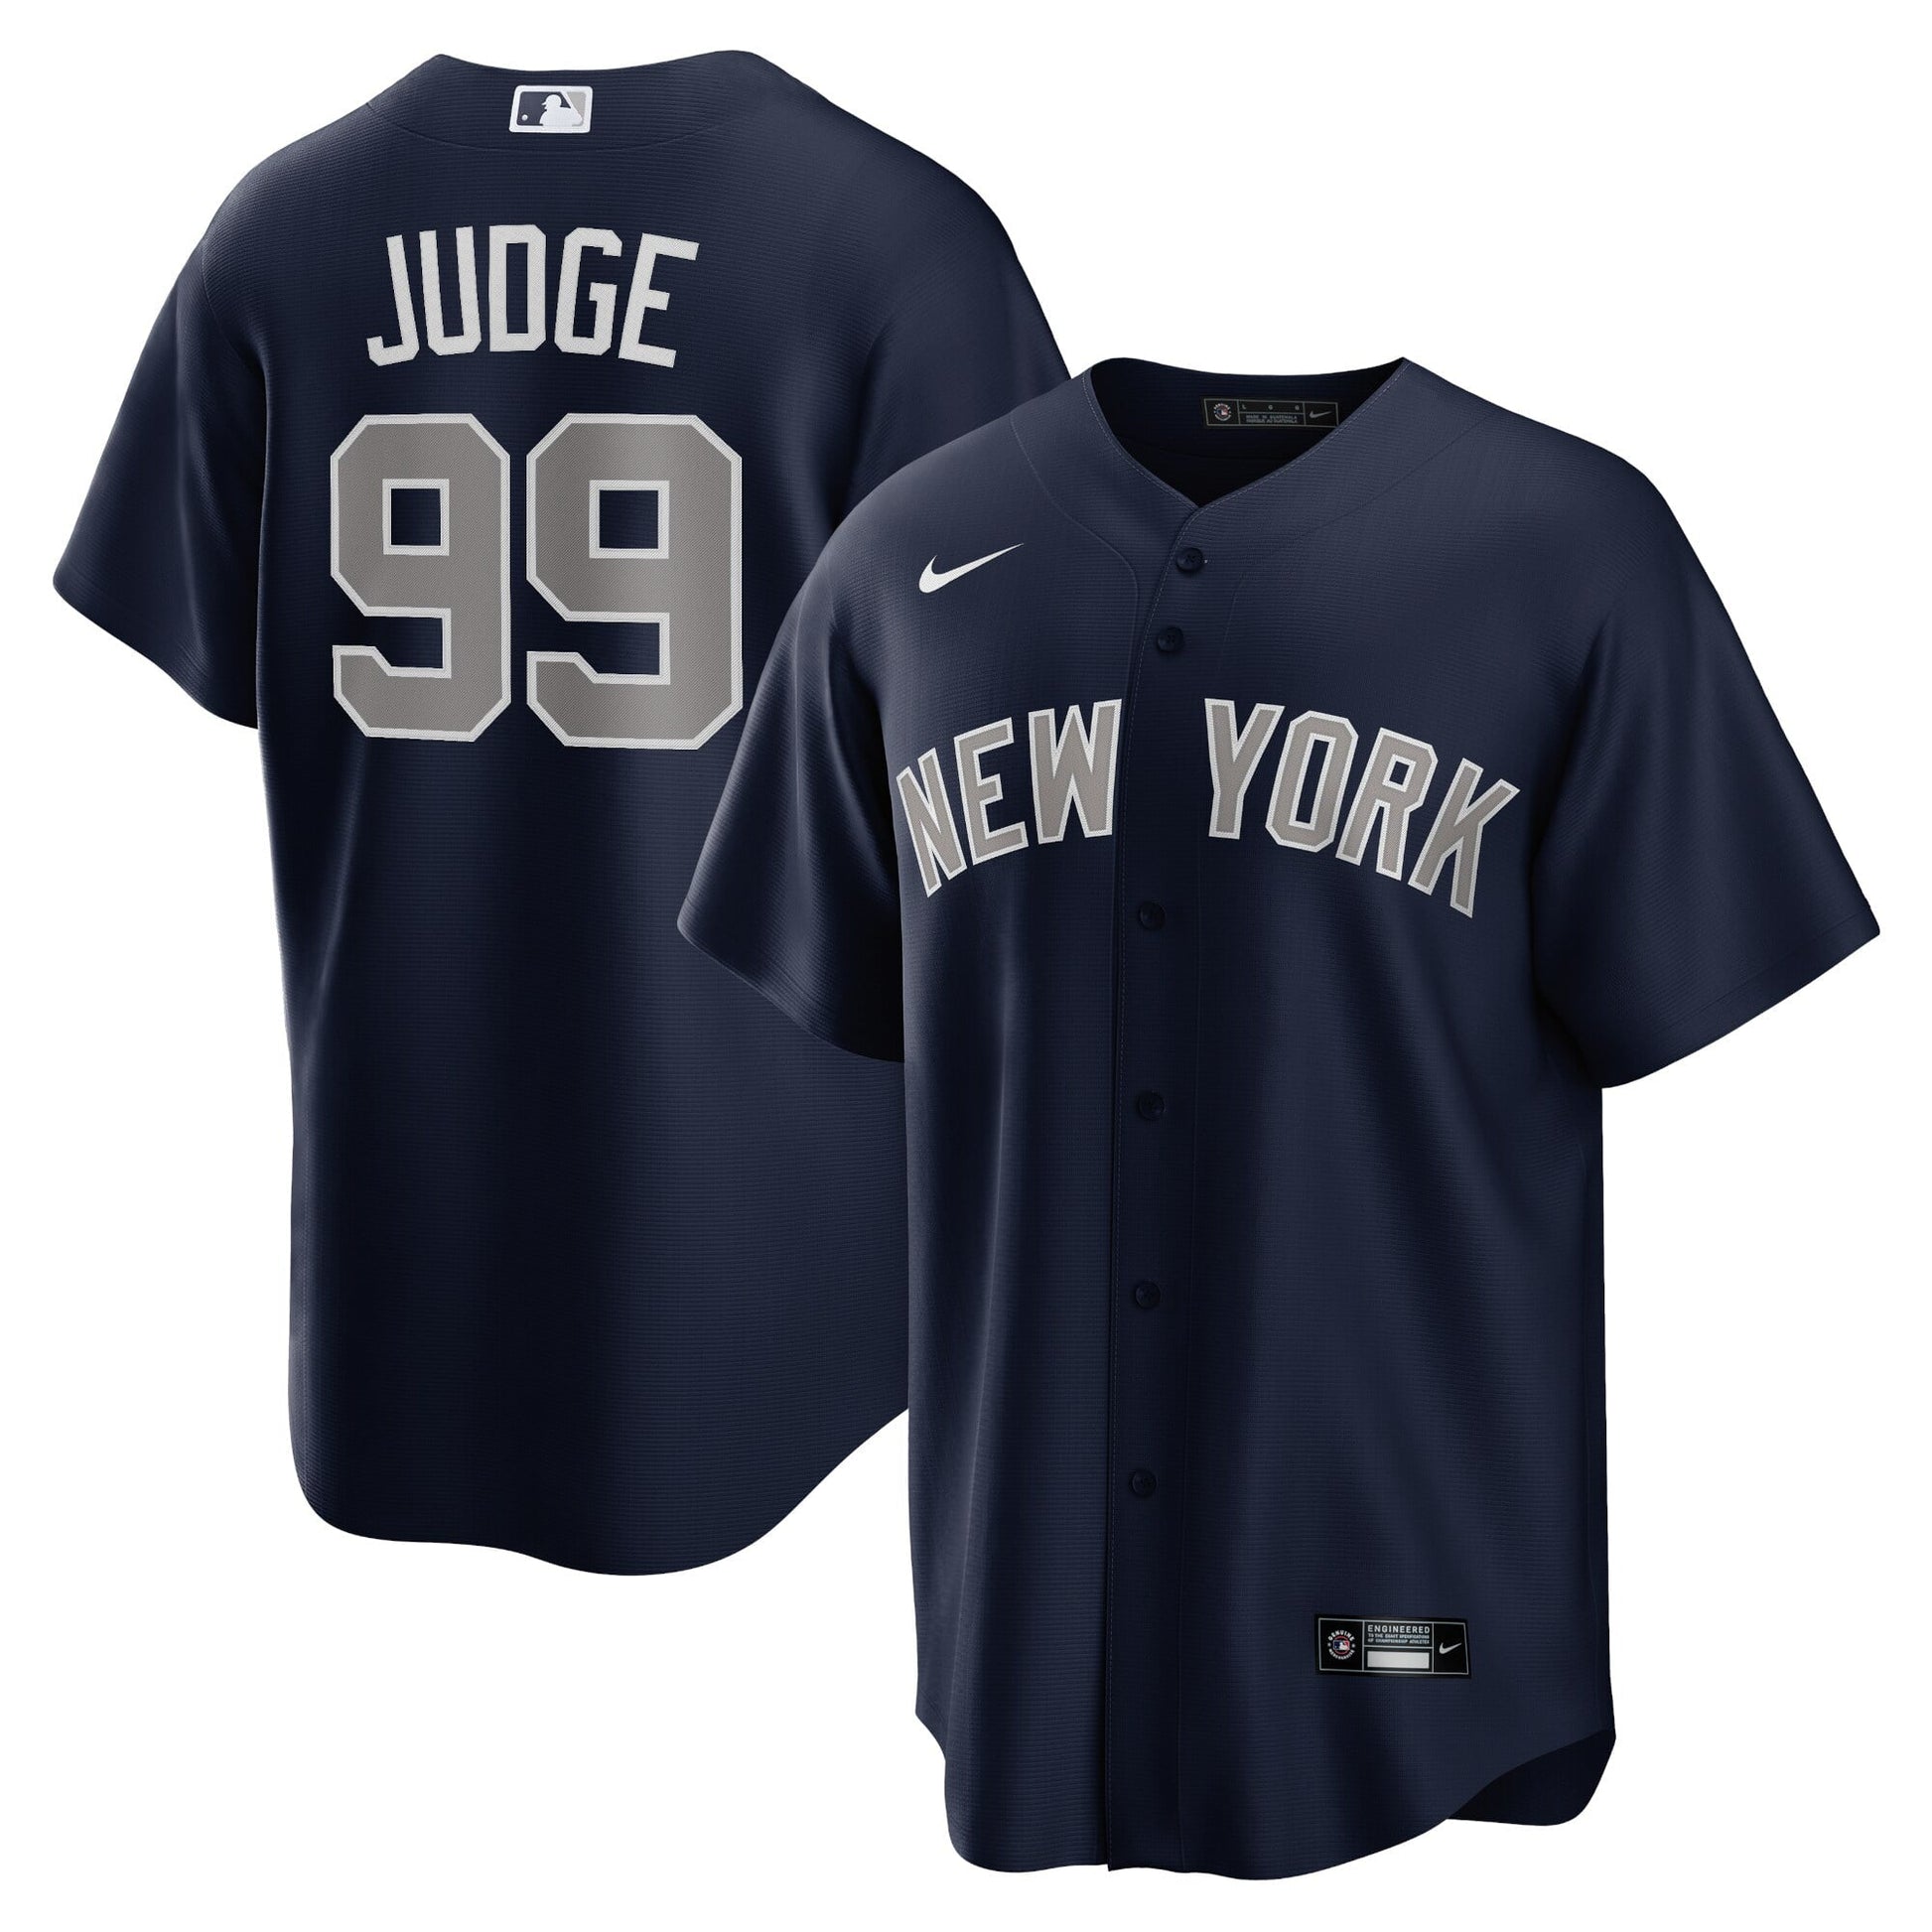 Aaron Judge New York Yankees Nike White Jersey*